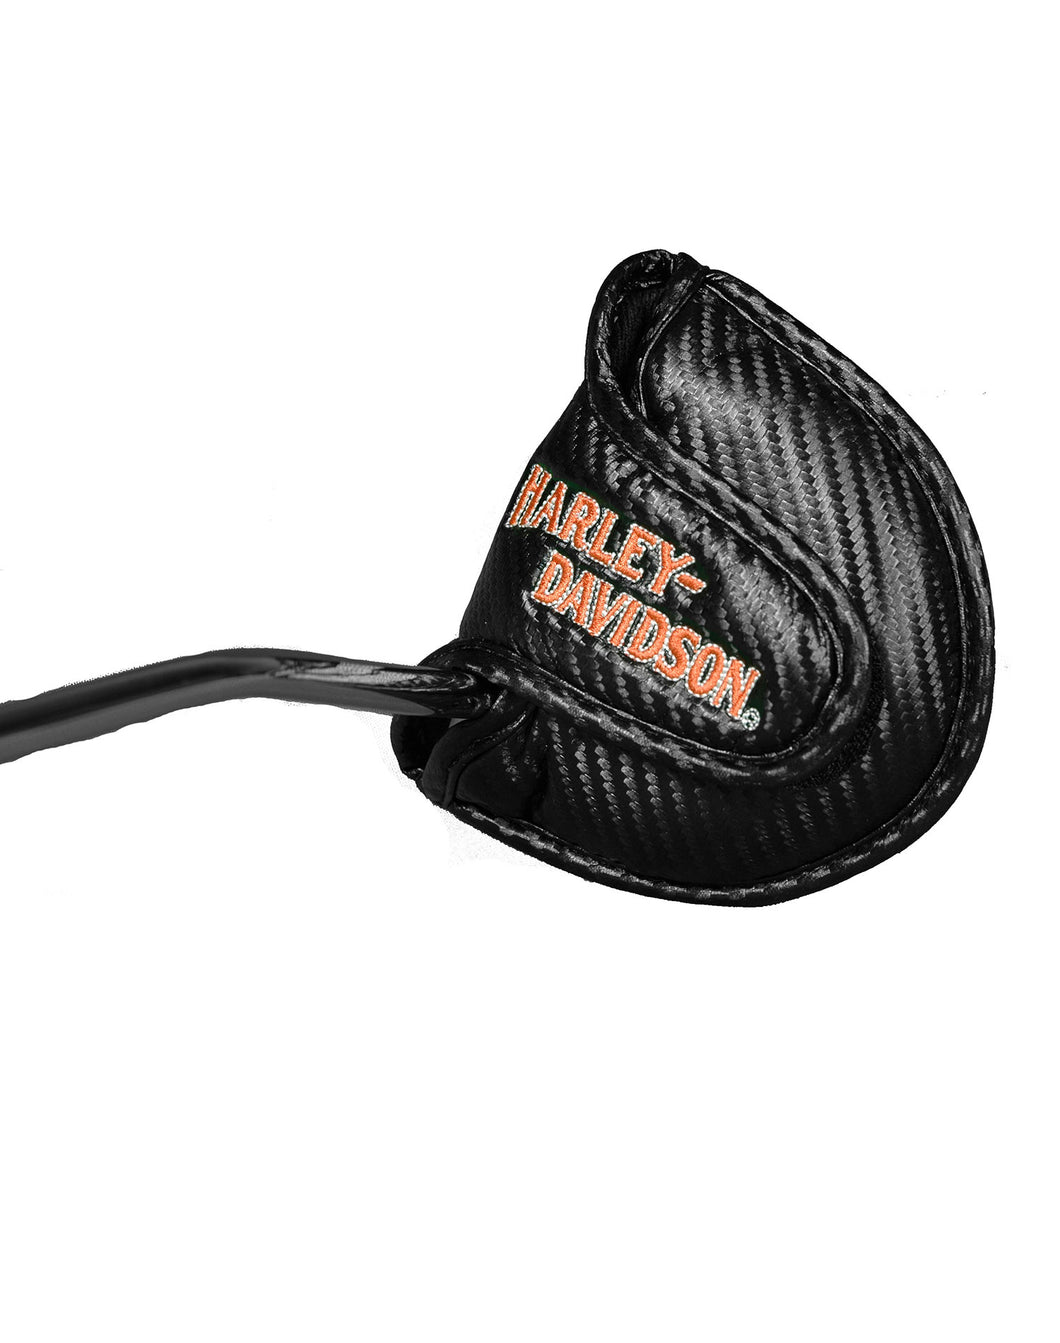 Harley Davidson Golf Mallet Putter Headcover